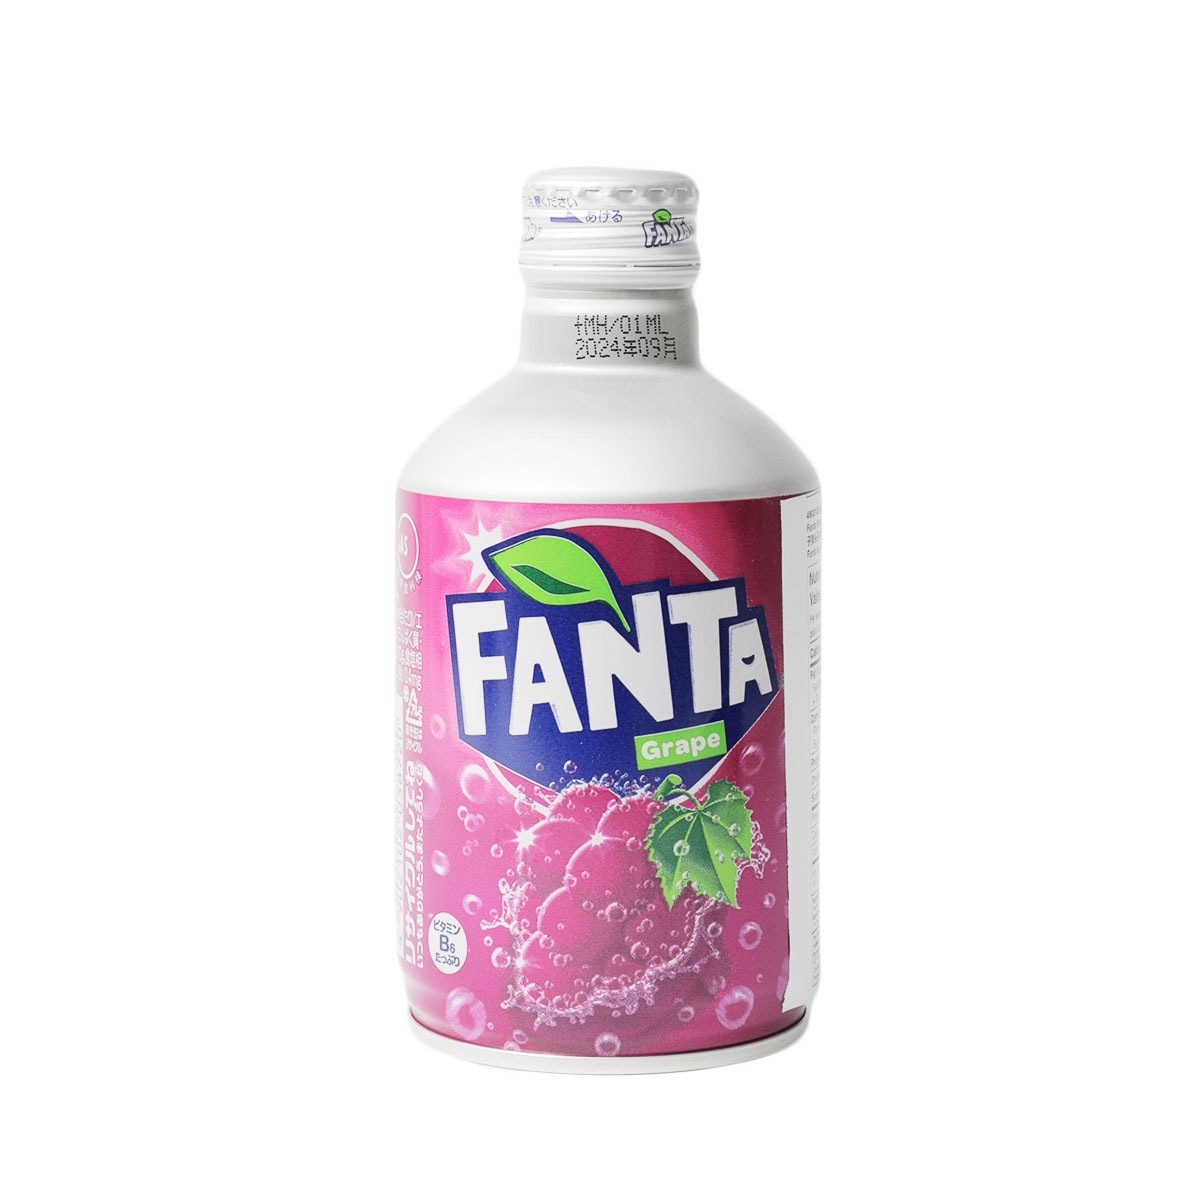 fanta-grape-flavor